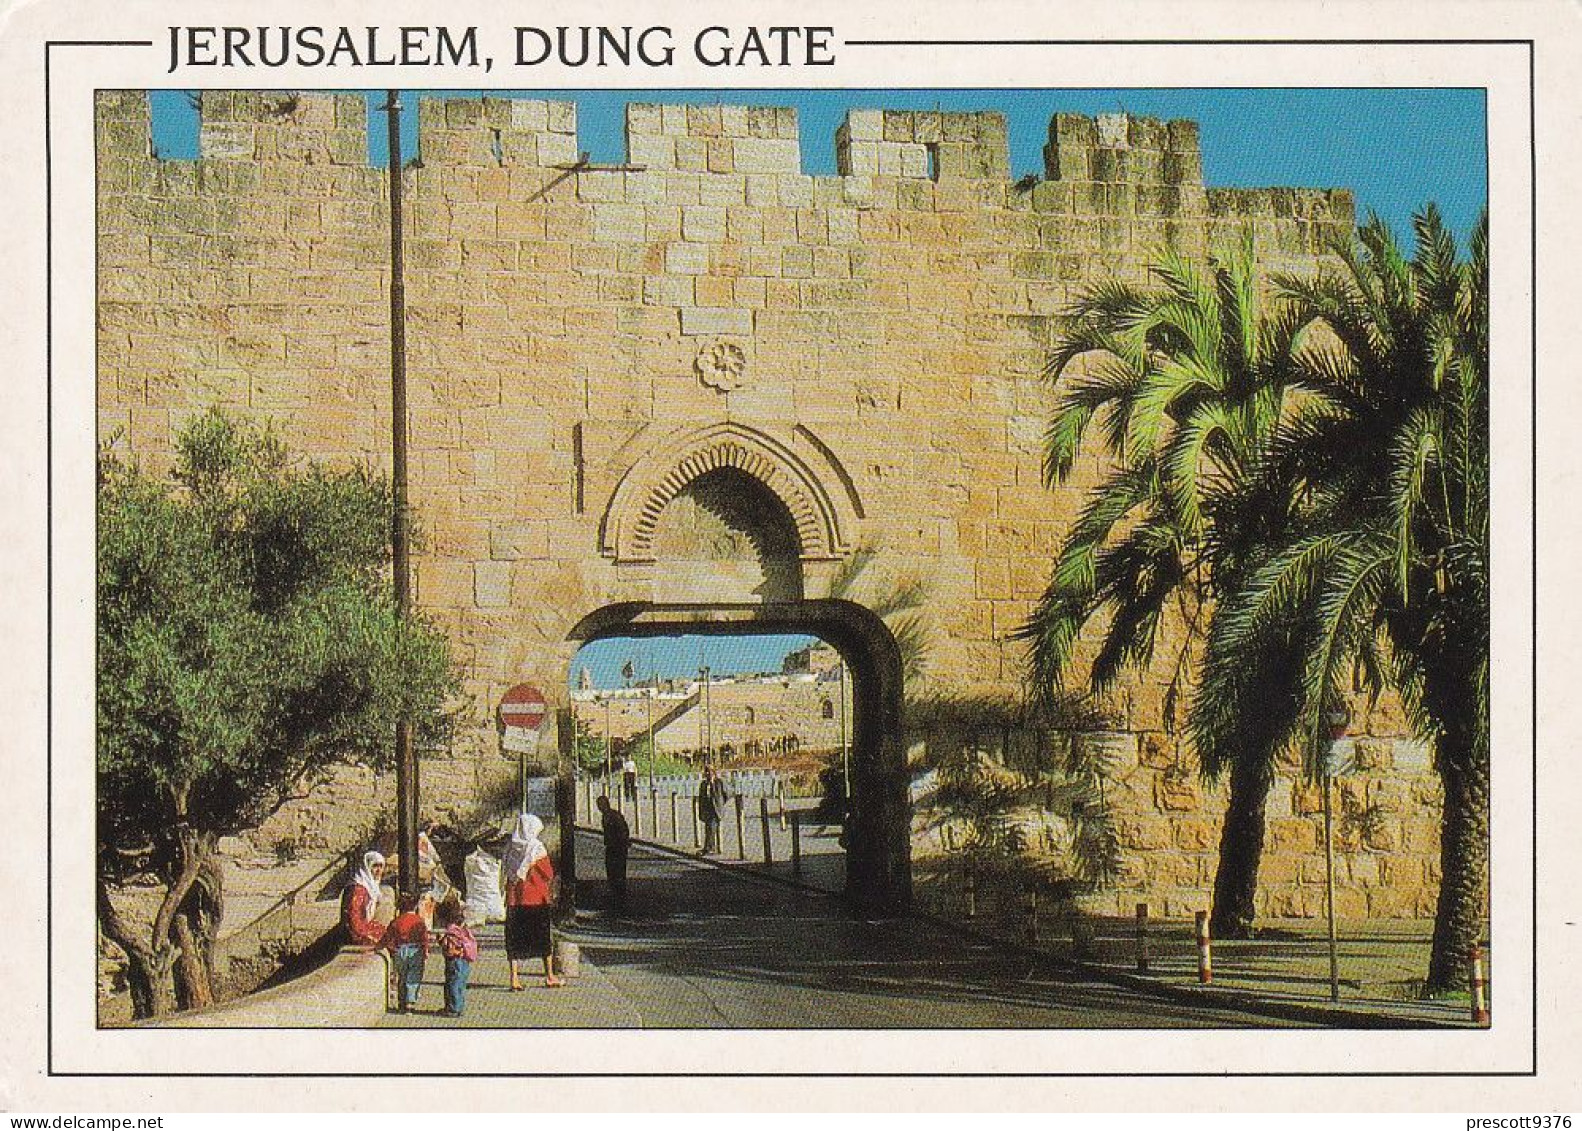 Dung Gate, Jerusalem -   Unused Postcard   - L Size 17x12Cm - LS4 - Israel